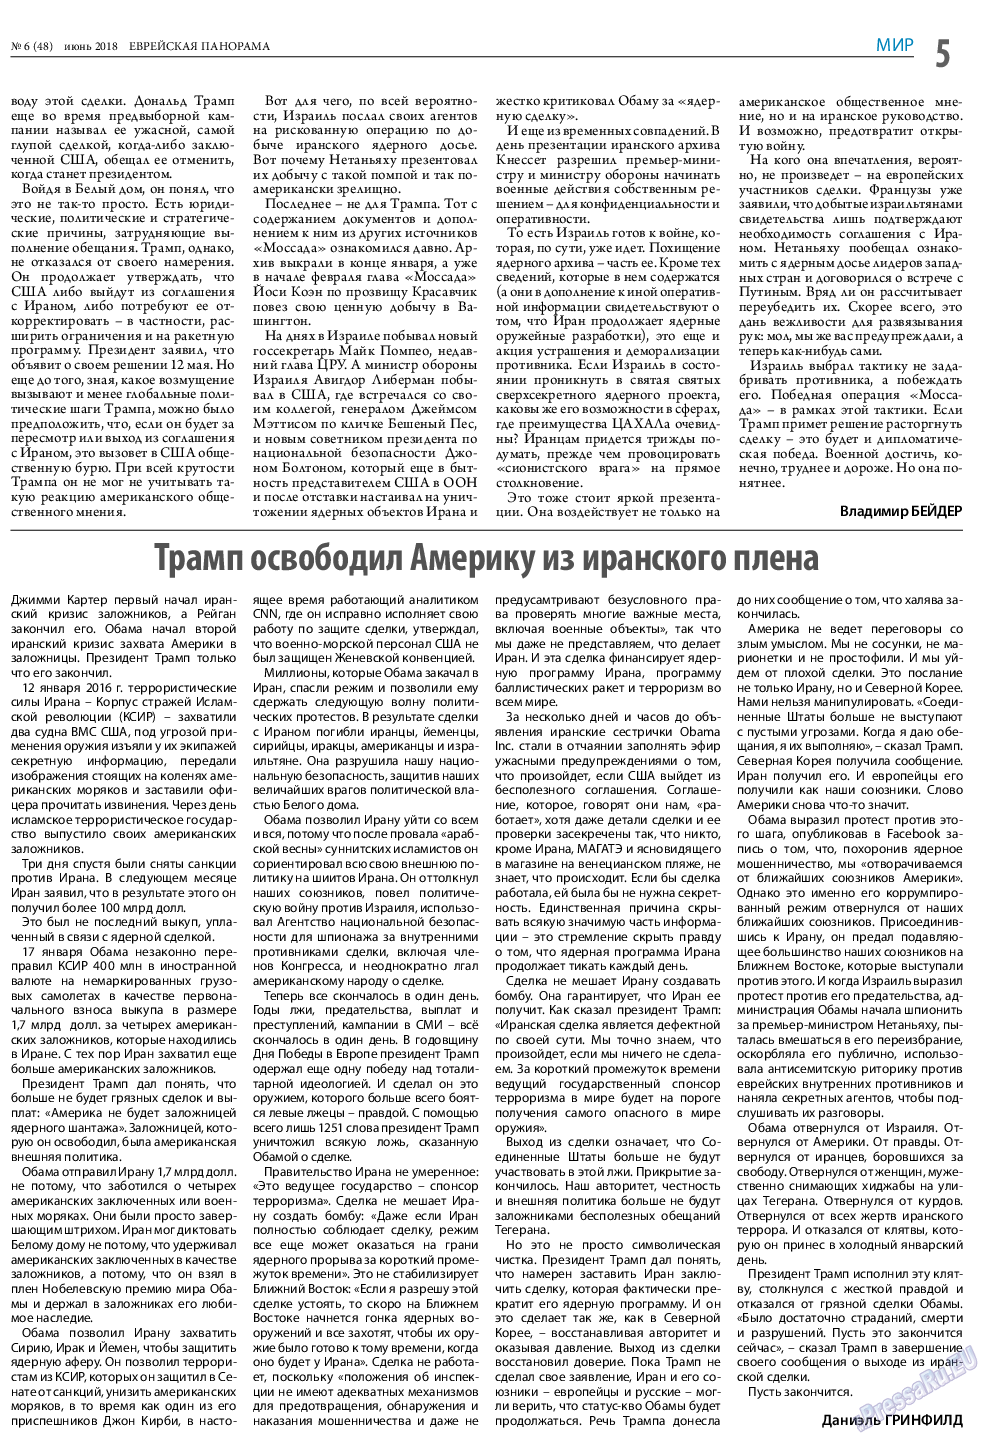 Еврейская панорама, газета. 2018 №6 стр.5